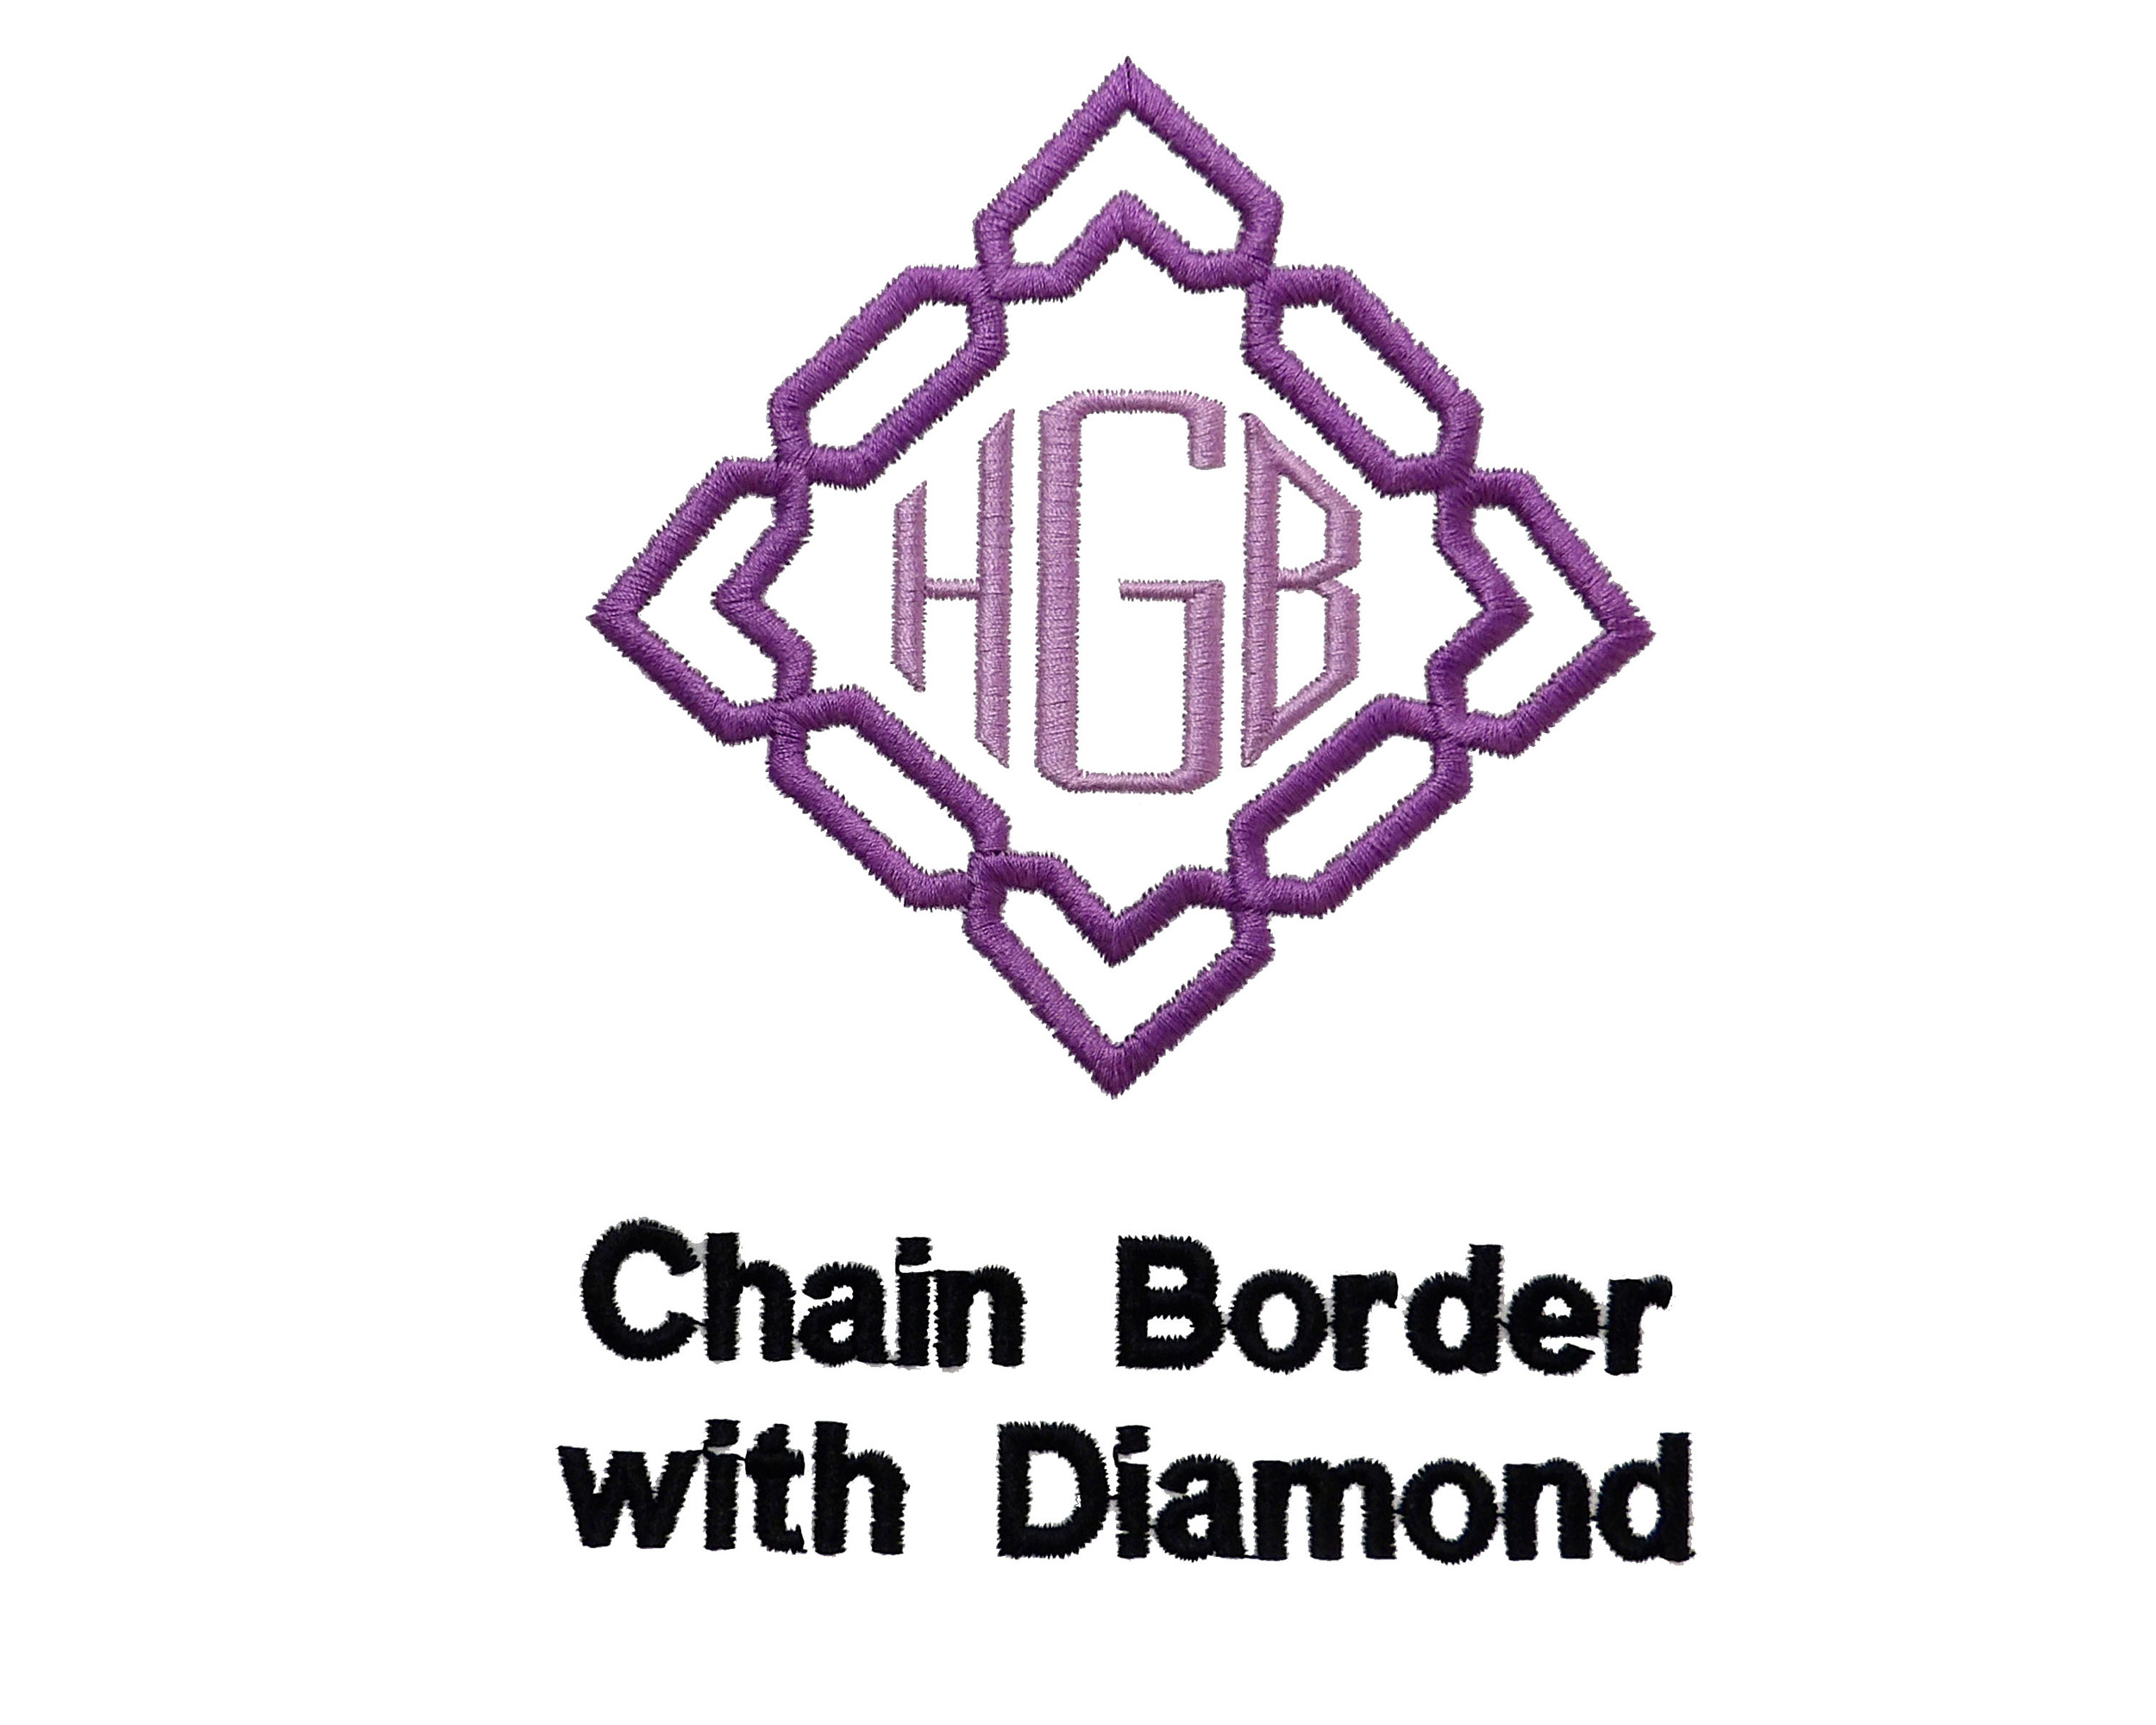 Chain Border With Diamond.jpg